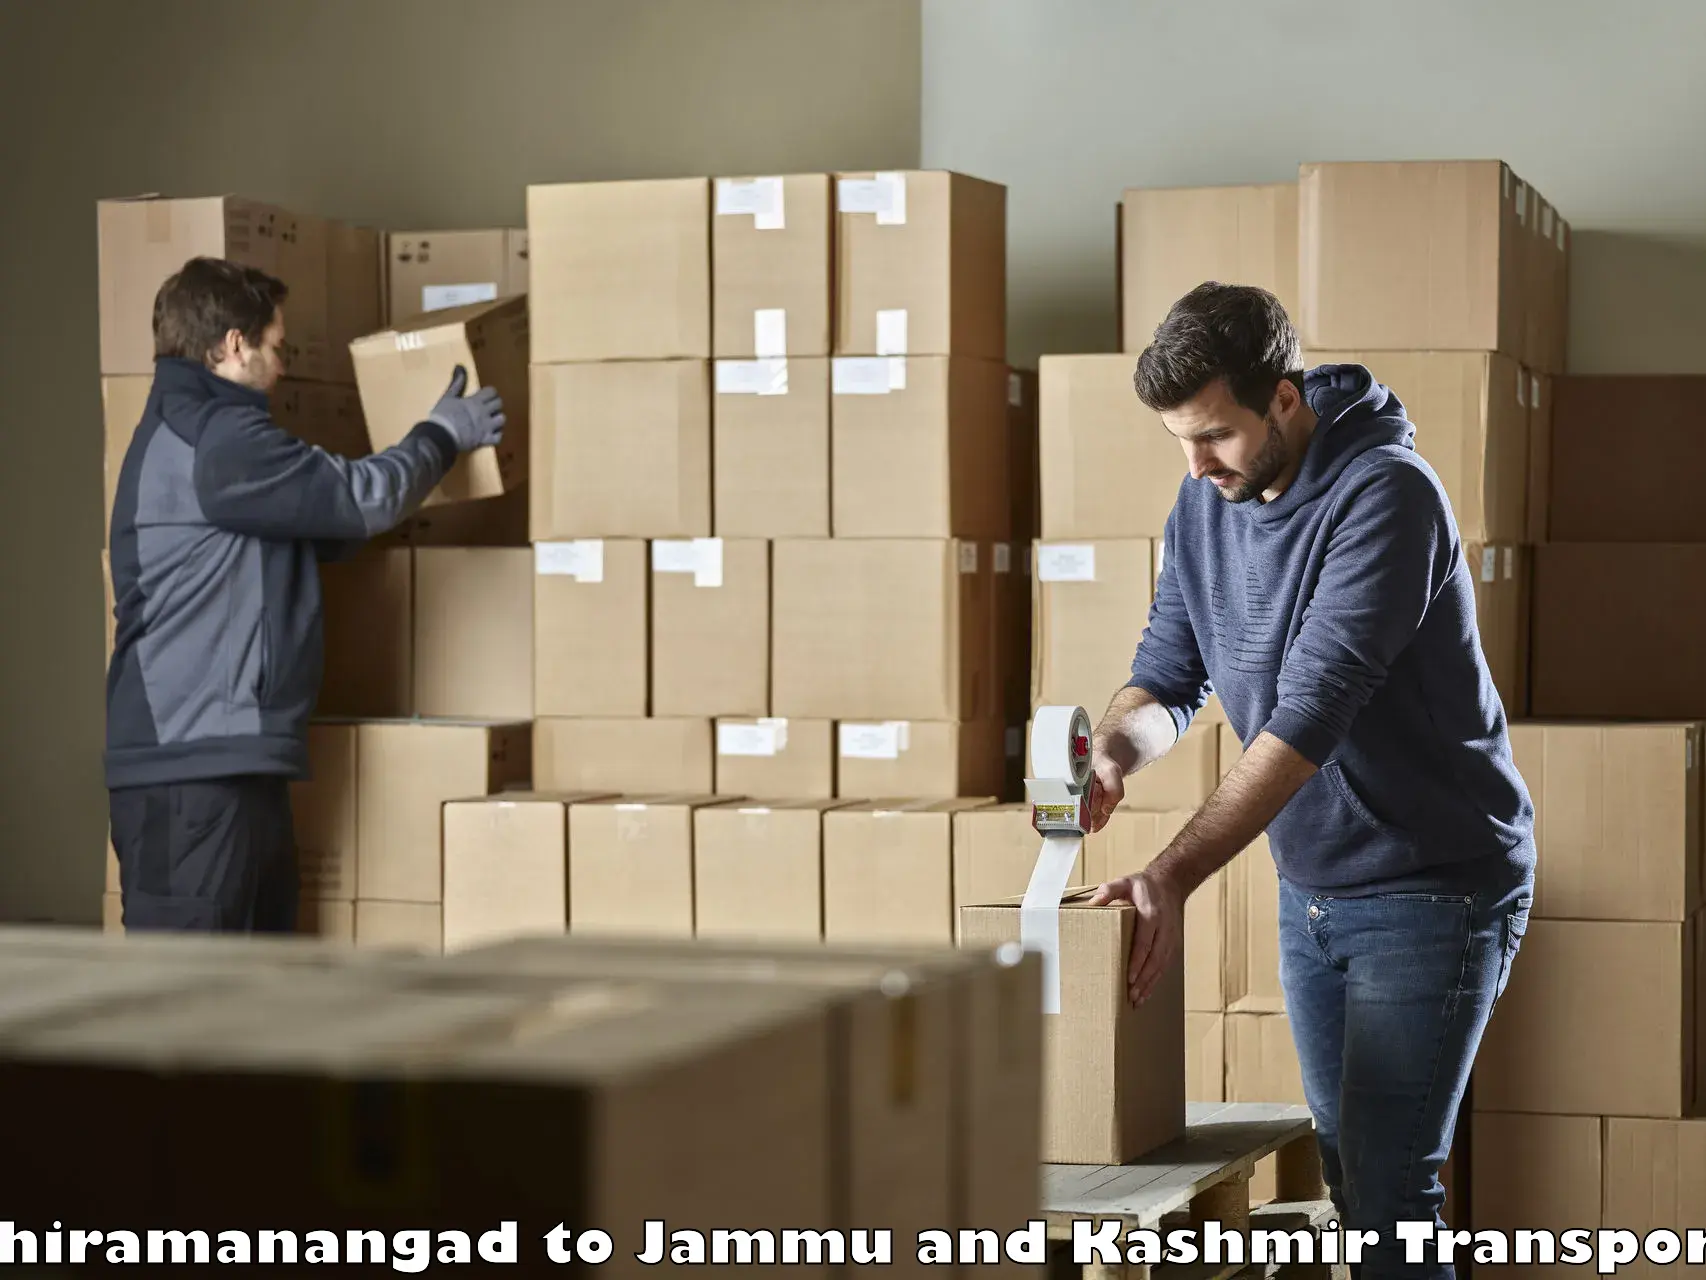 Transport in sharing Chiramanangad to Srinagar Kashmir